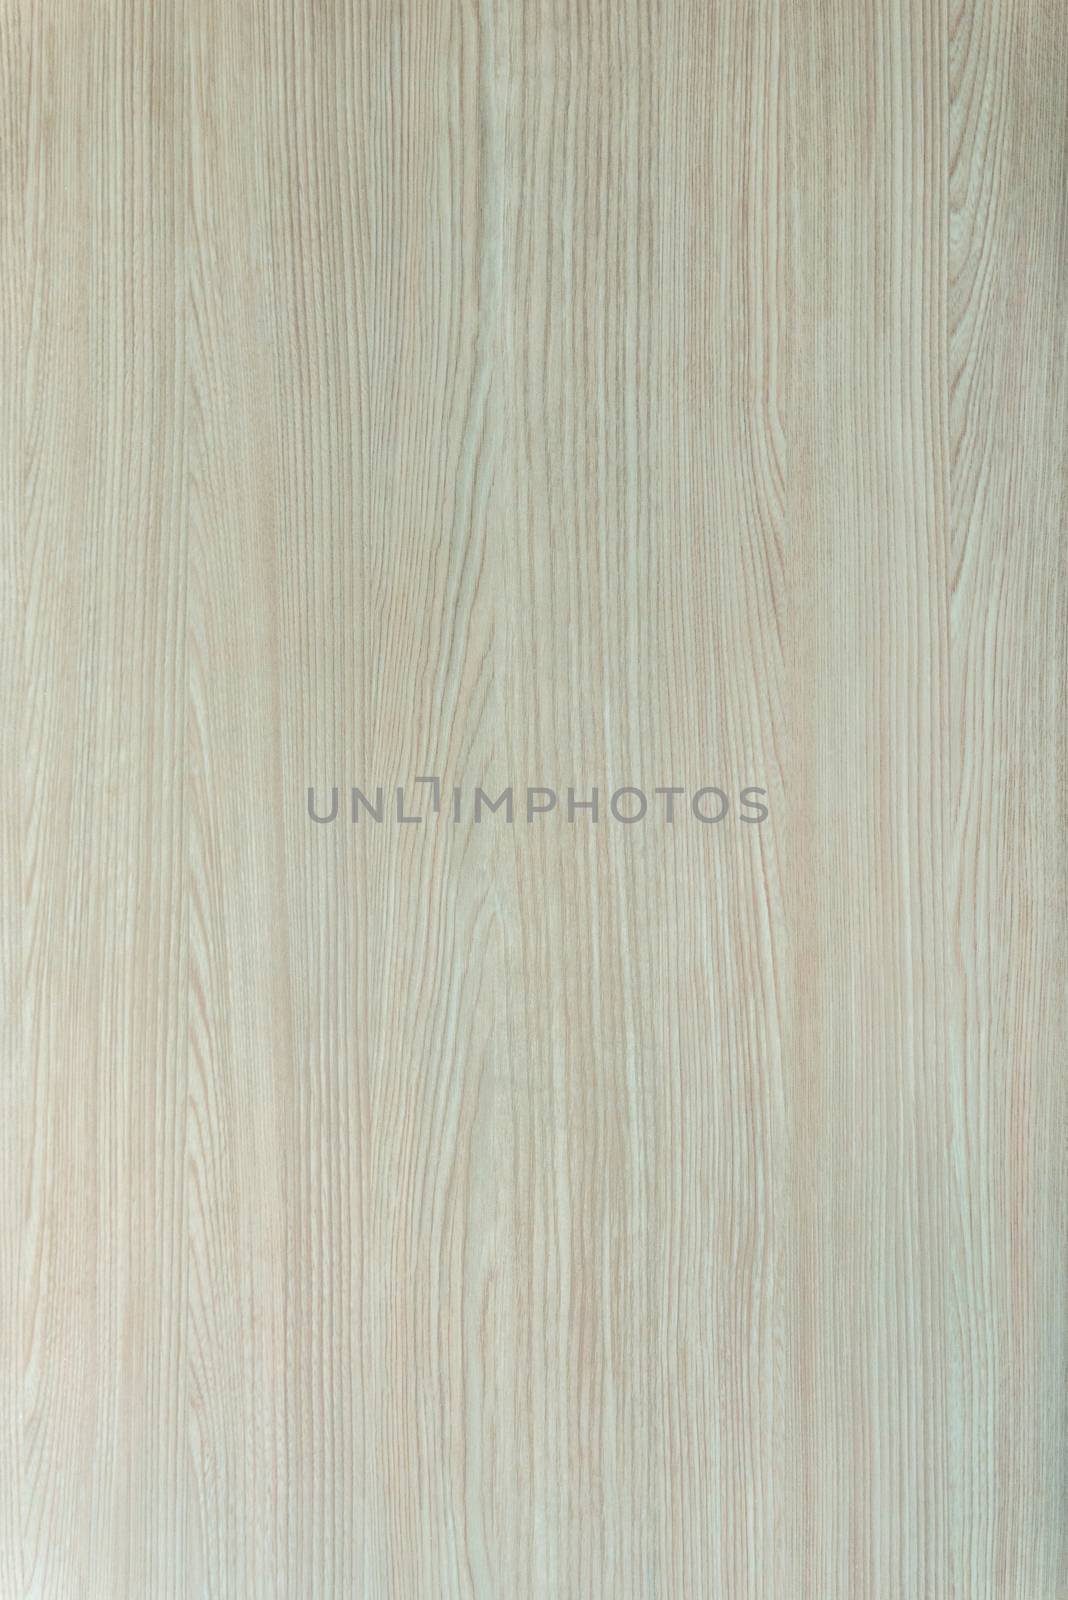 wood texture by antpkr